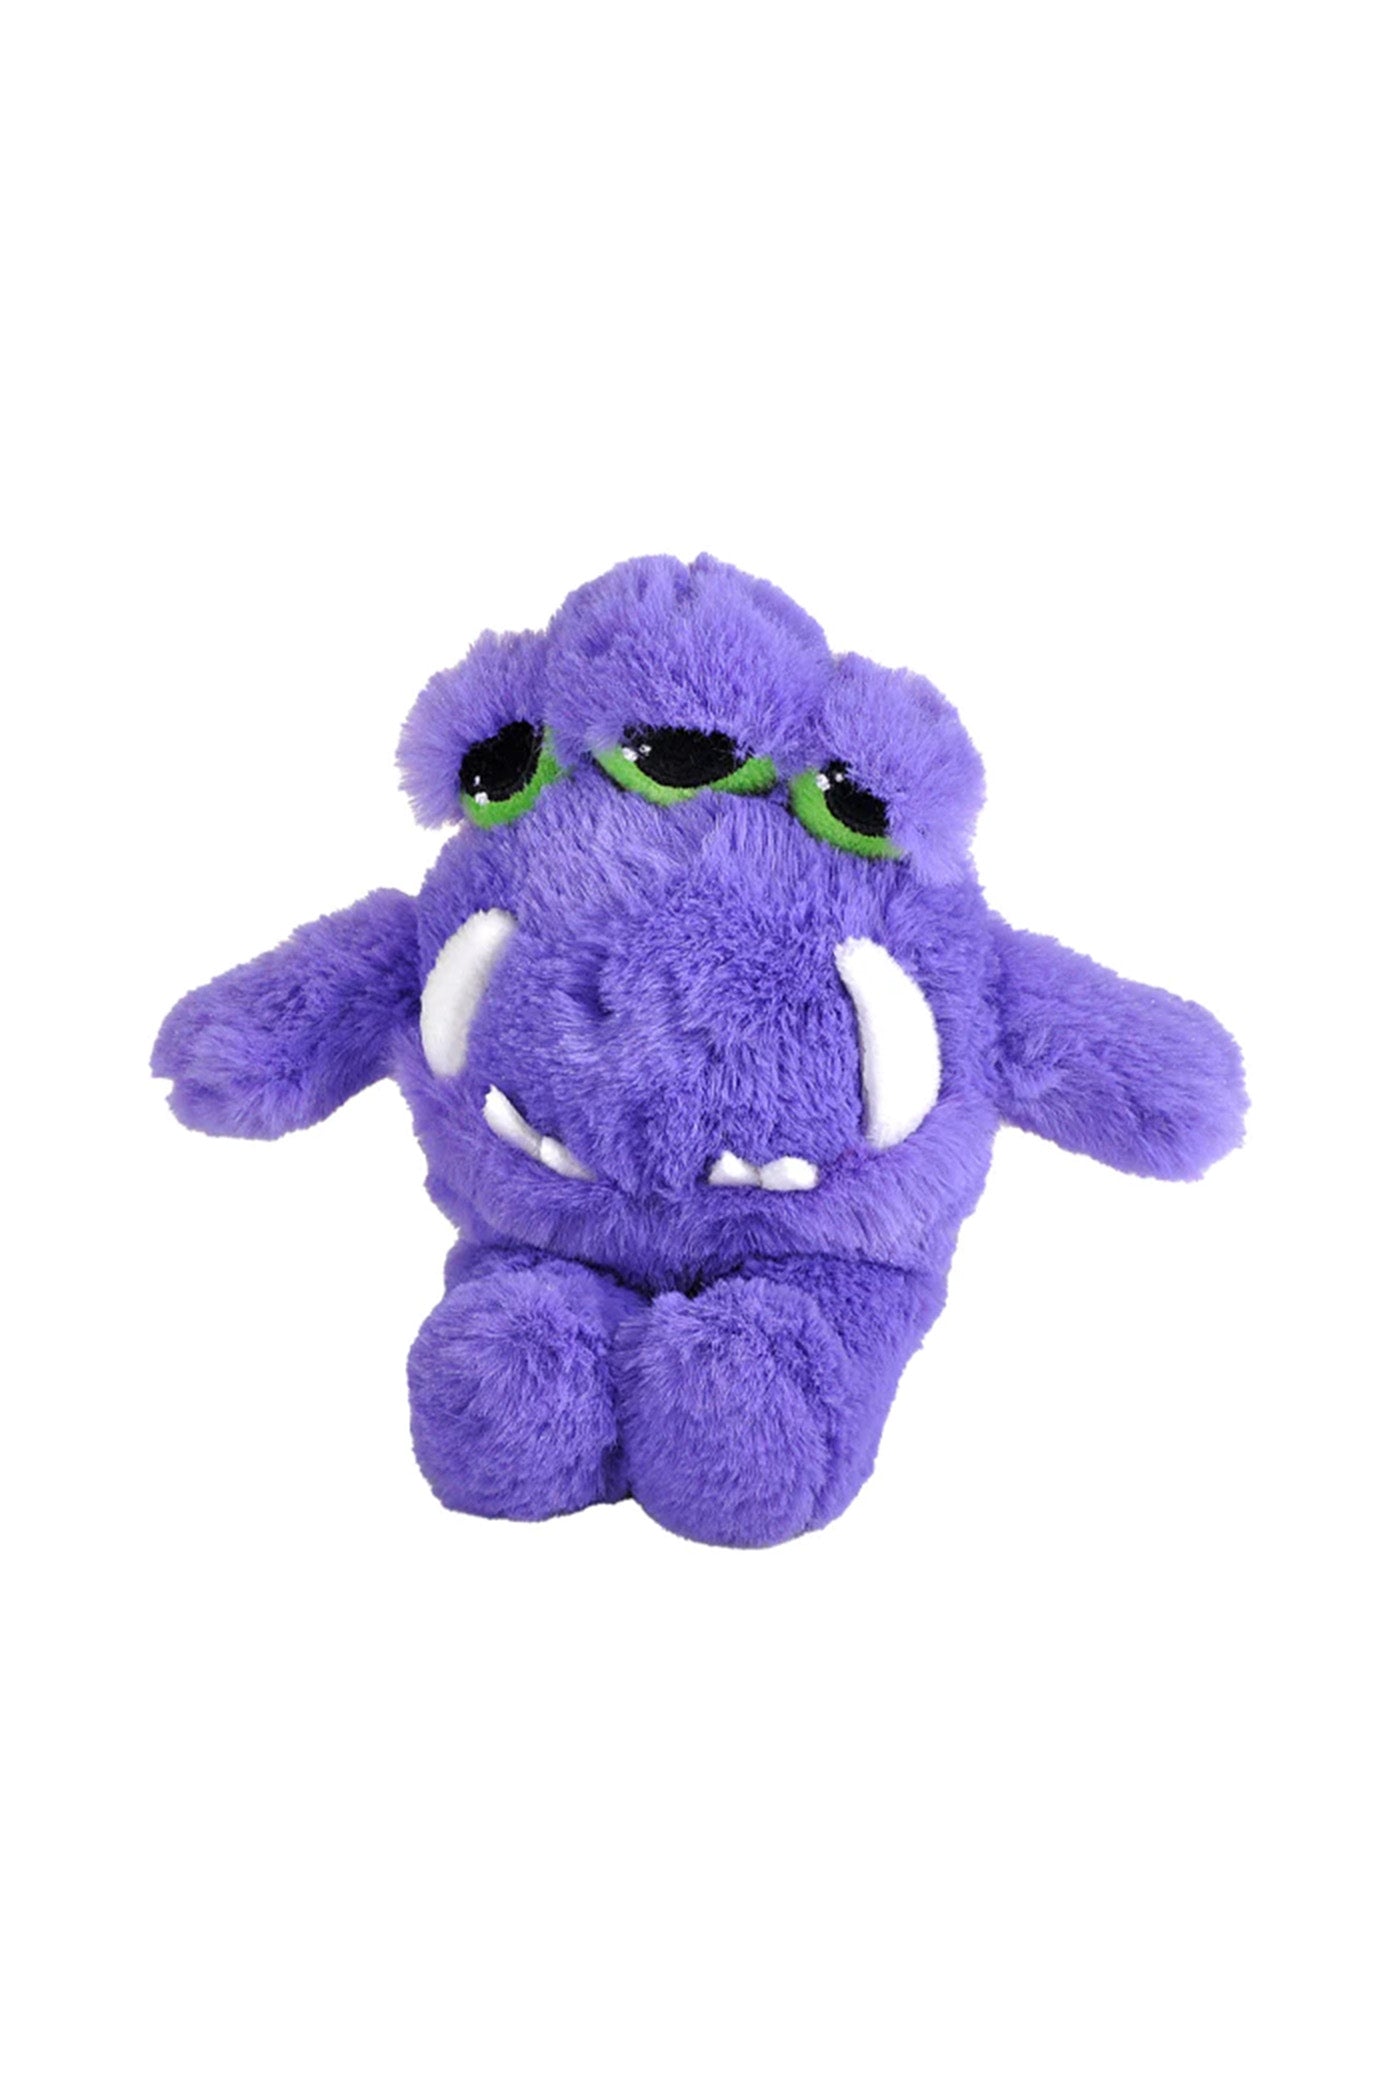 Monsterkins Vinnie Jr. Stuffed Animal